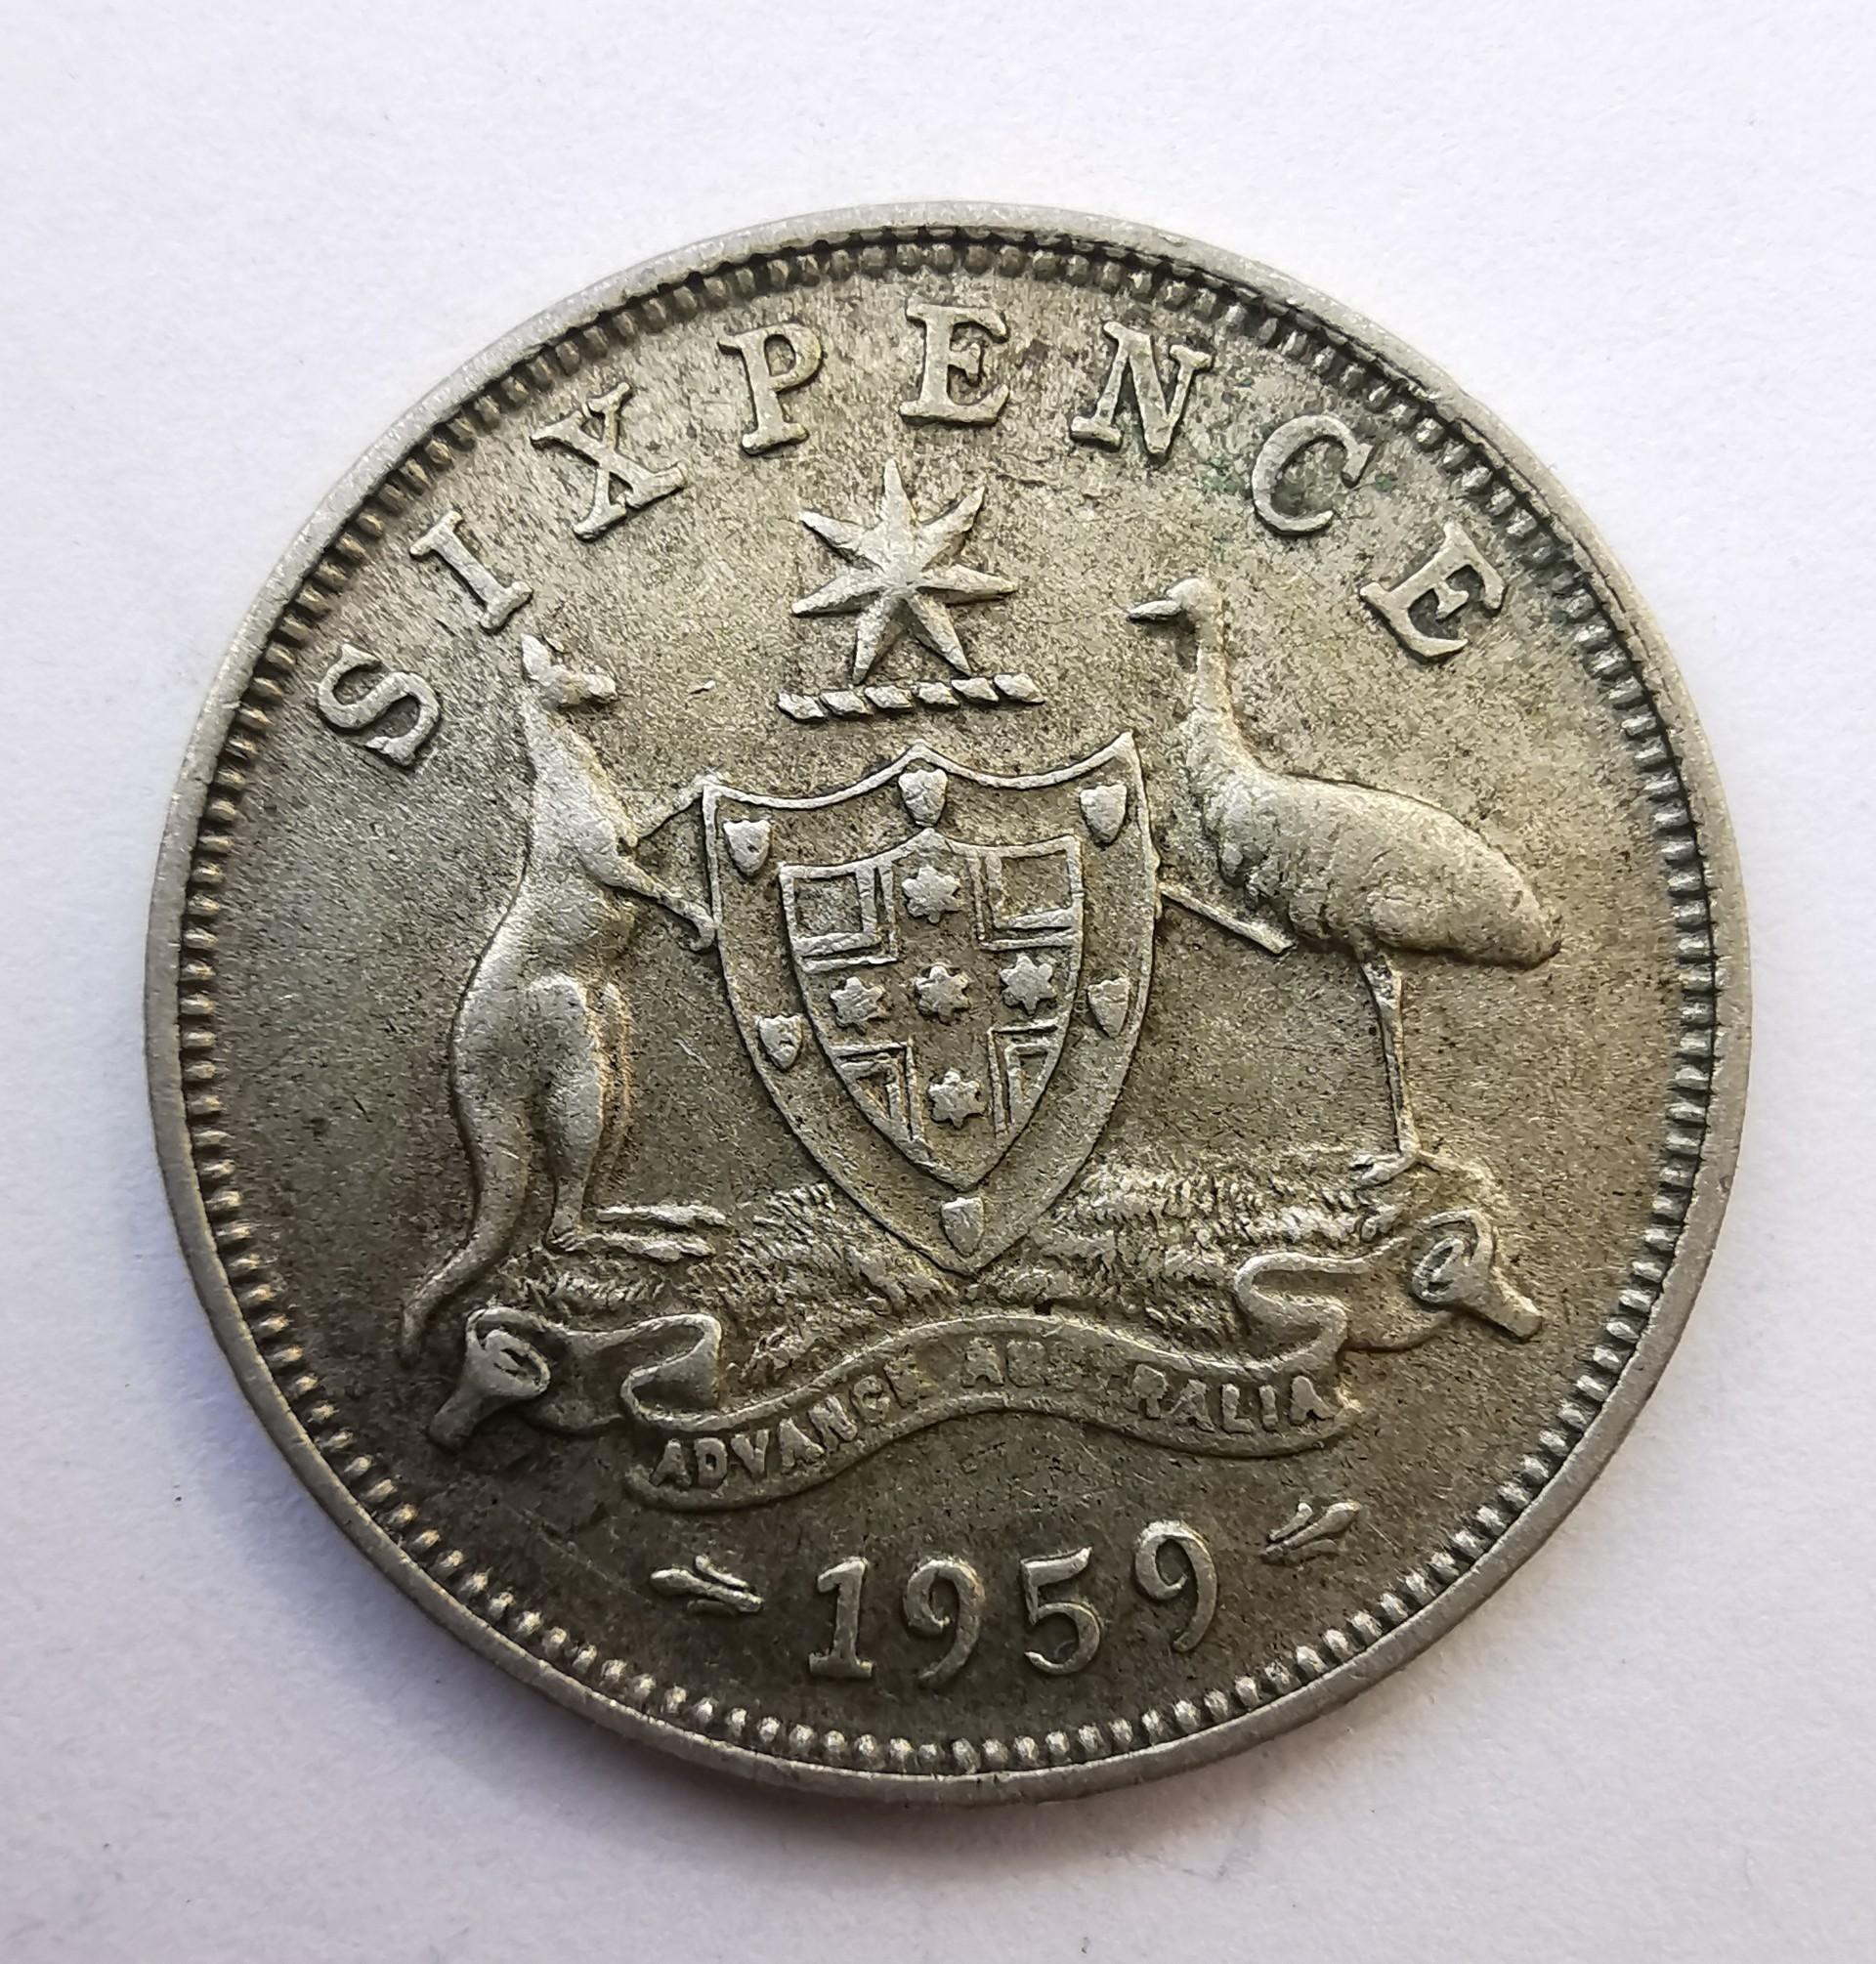 Australija 6 p 1959 sidabras